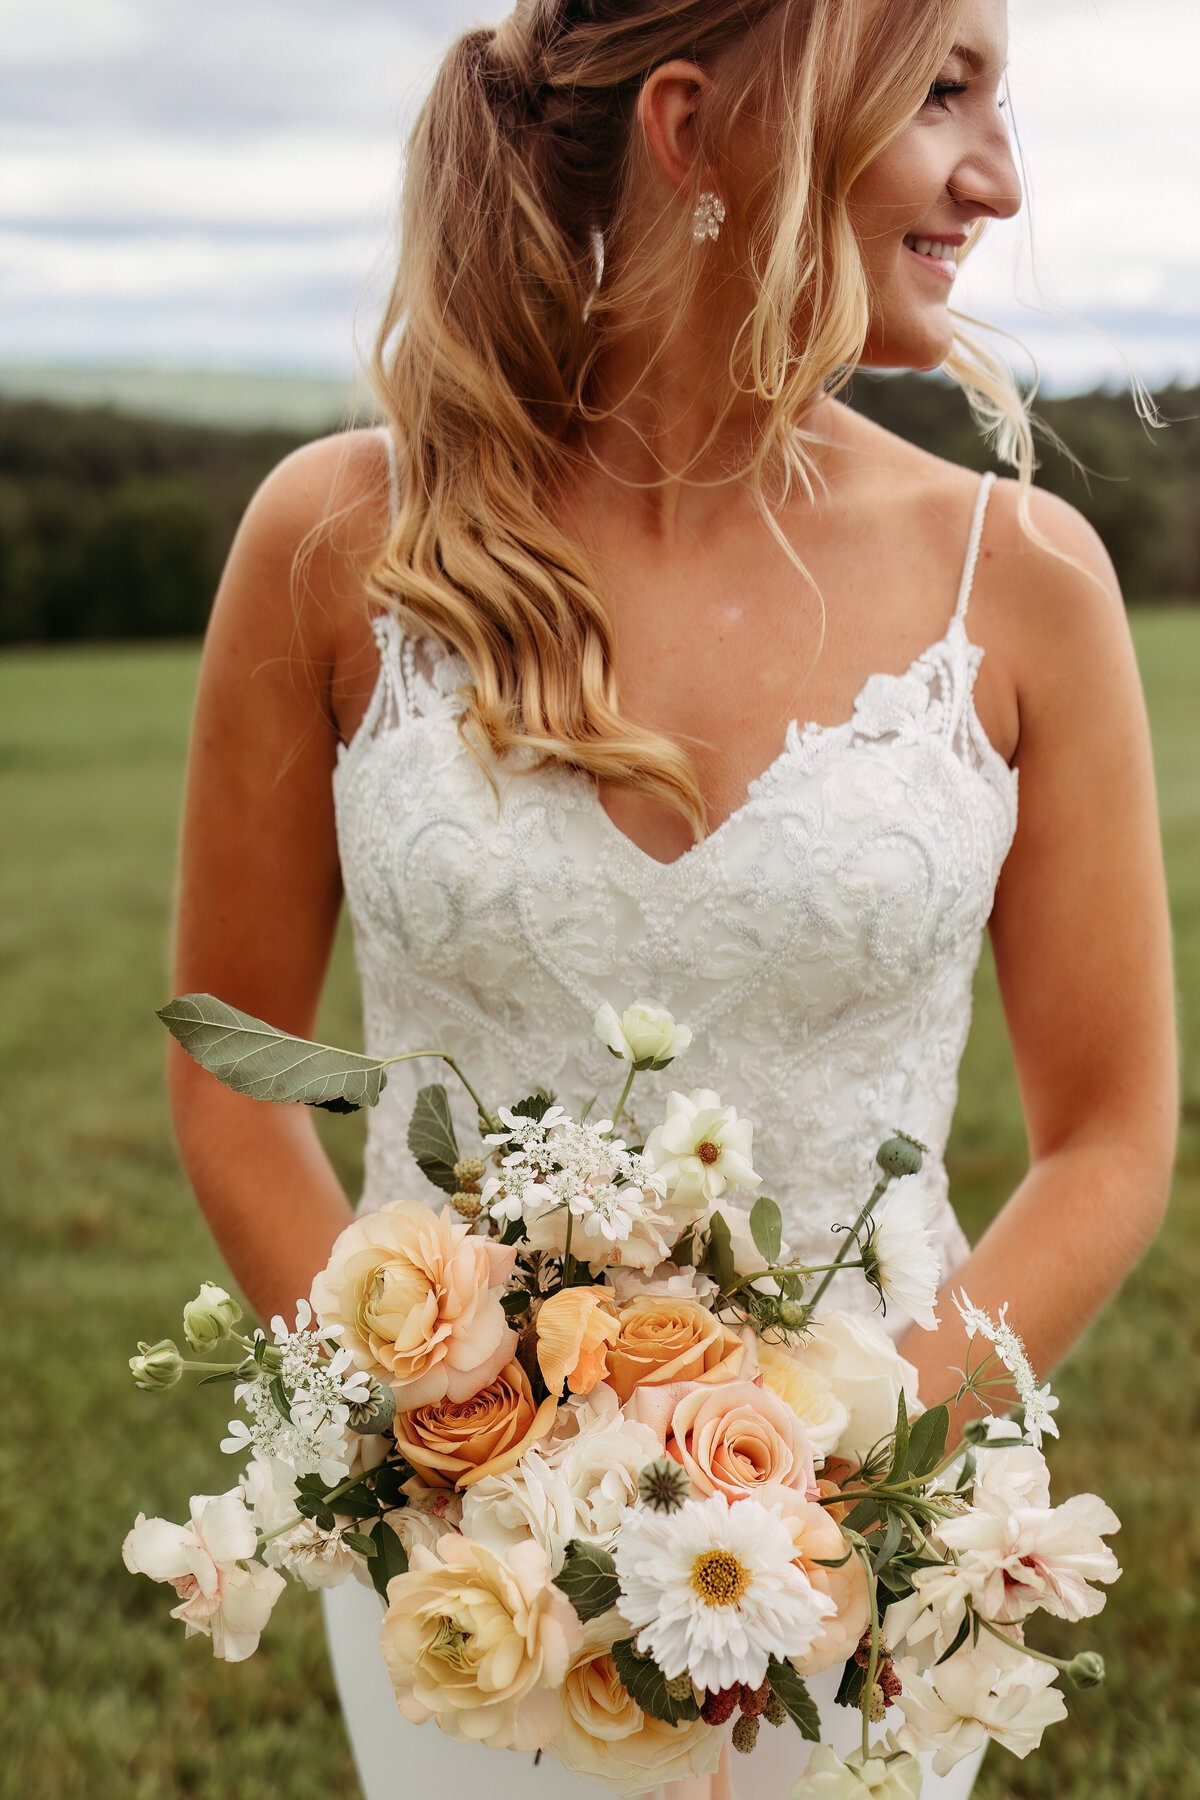 raymond-farm-new-hartford-ct-wedding-flowers-bridal-bouquet-petals-plates-24